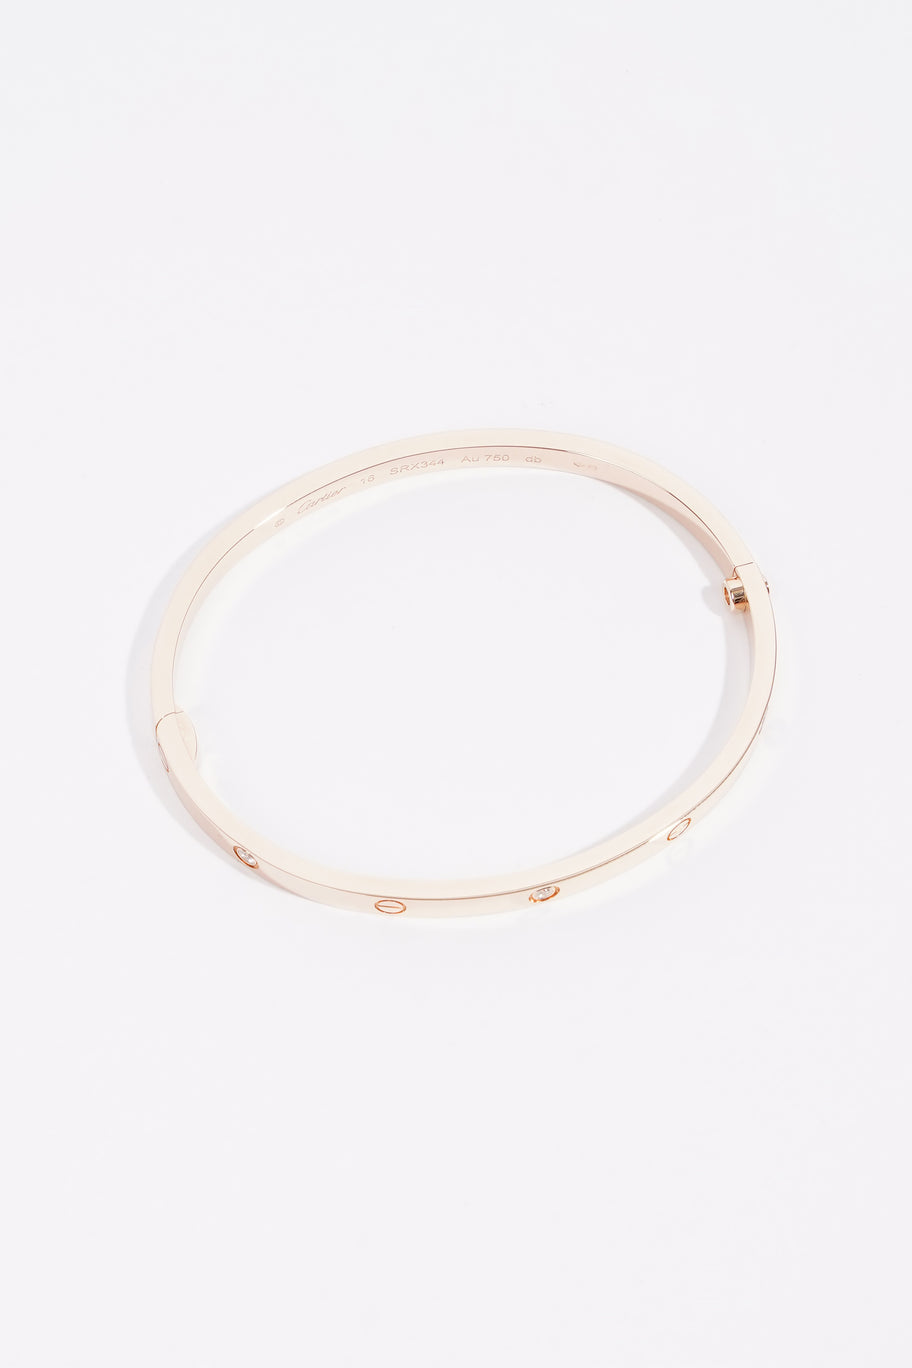 LOVE Bracelet, Small Model, 6 Diamonds Rose Gold Rose Gold 16cm Image 2